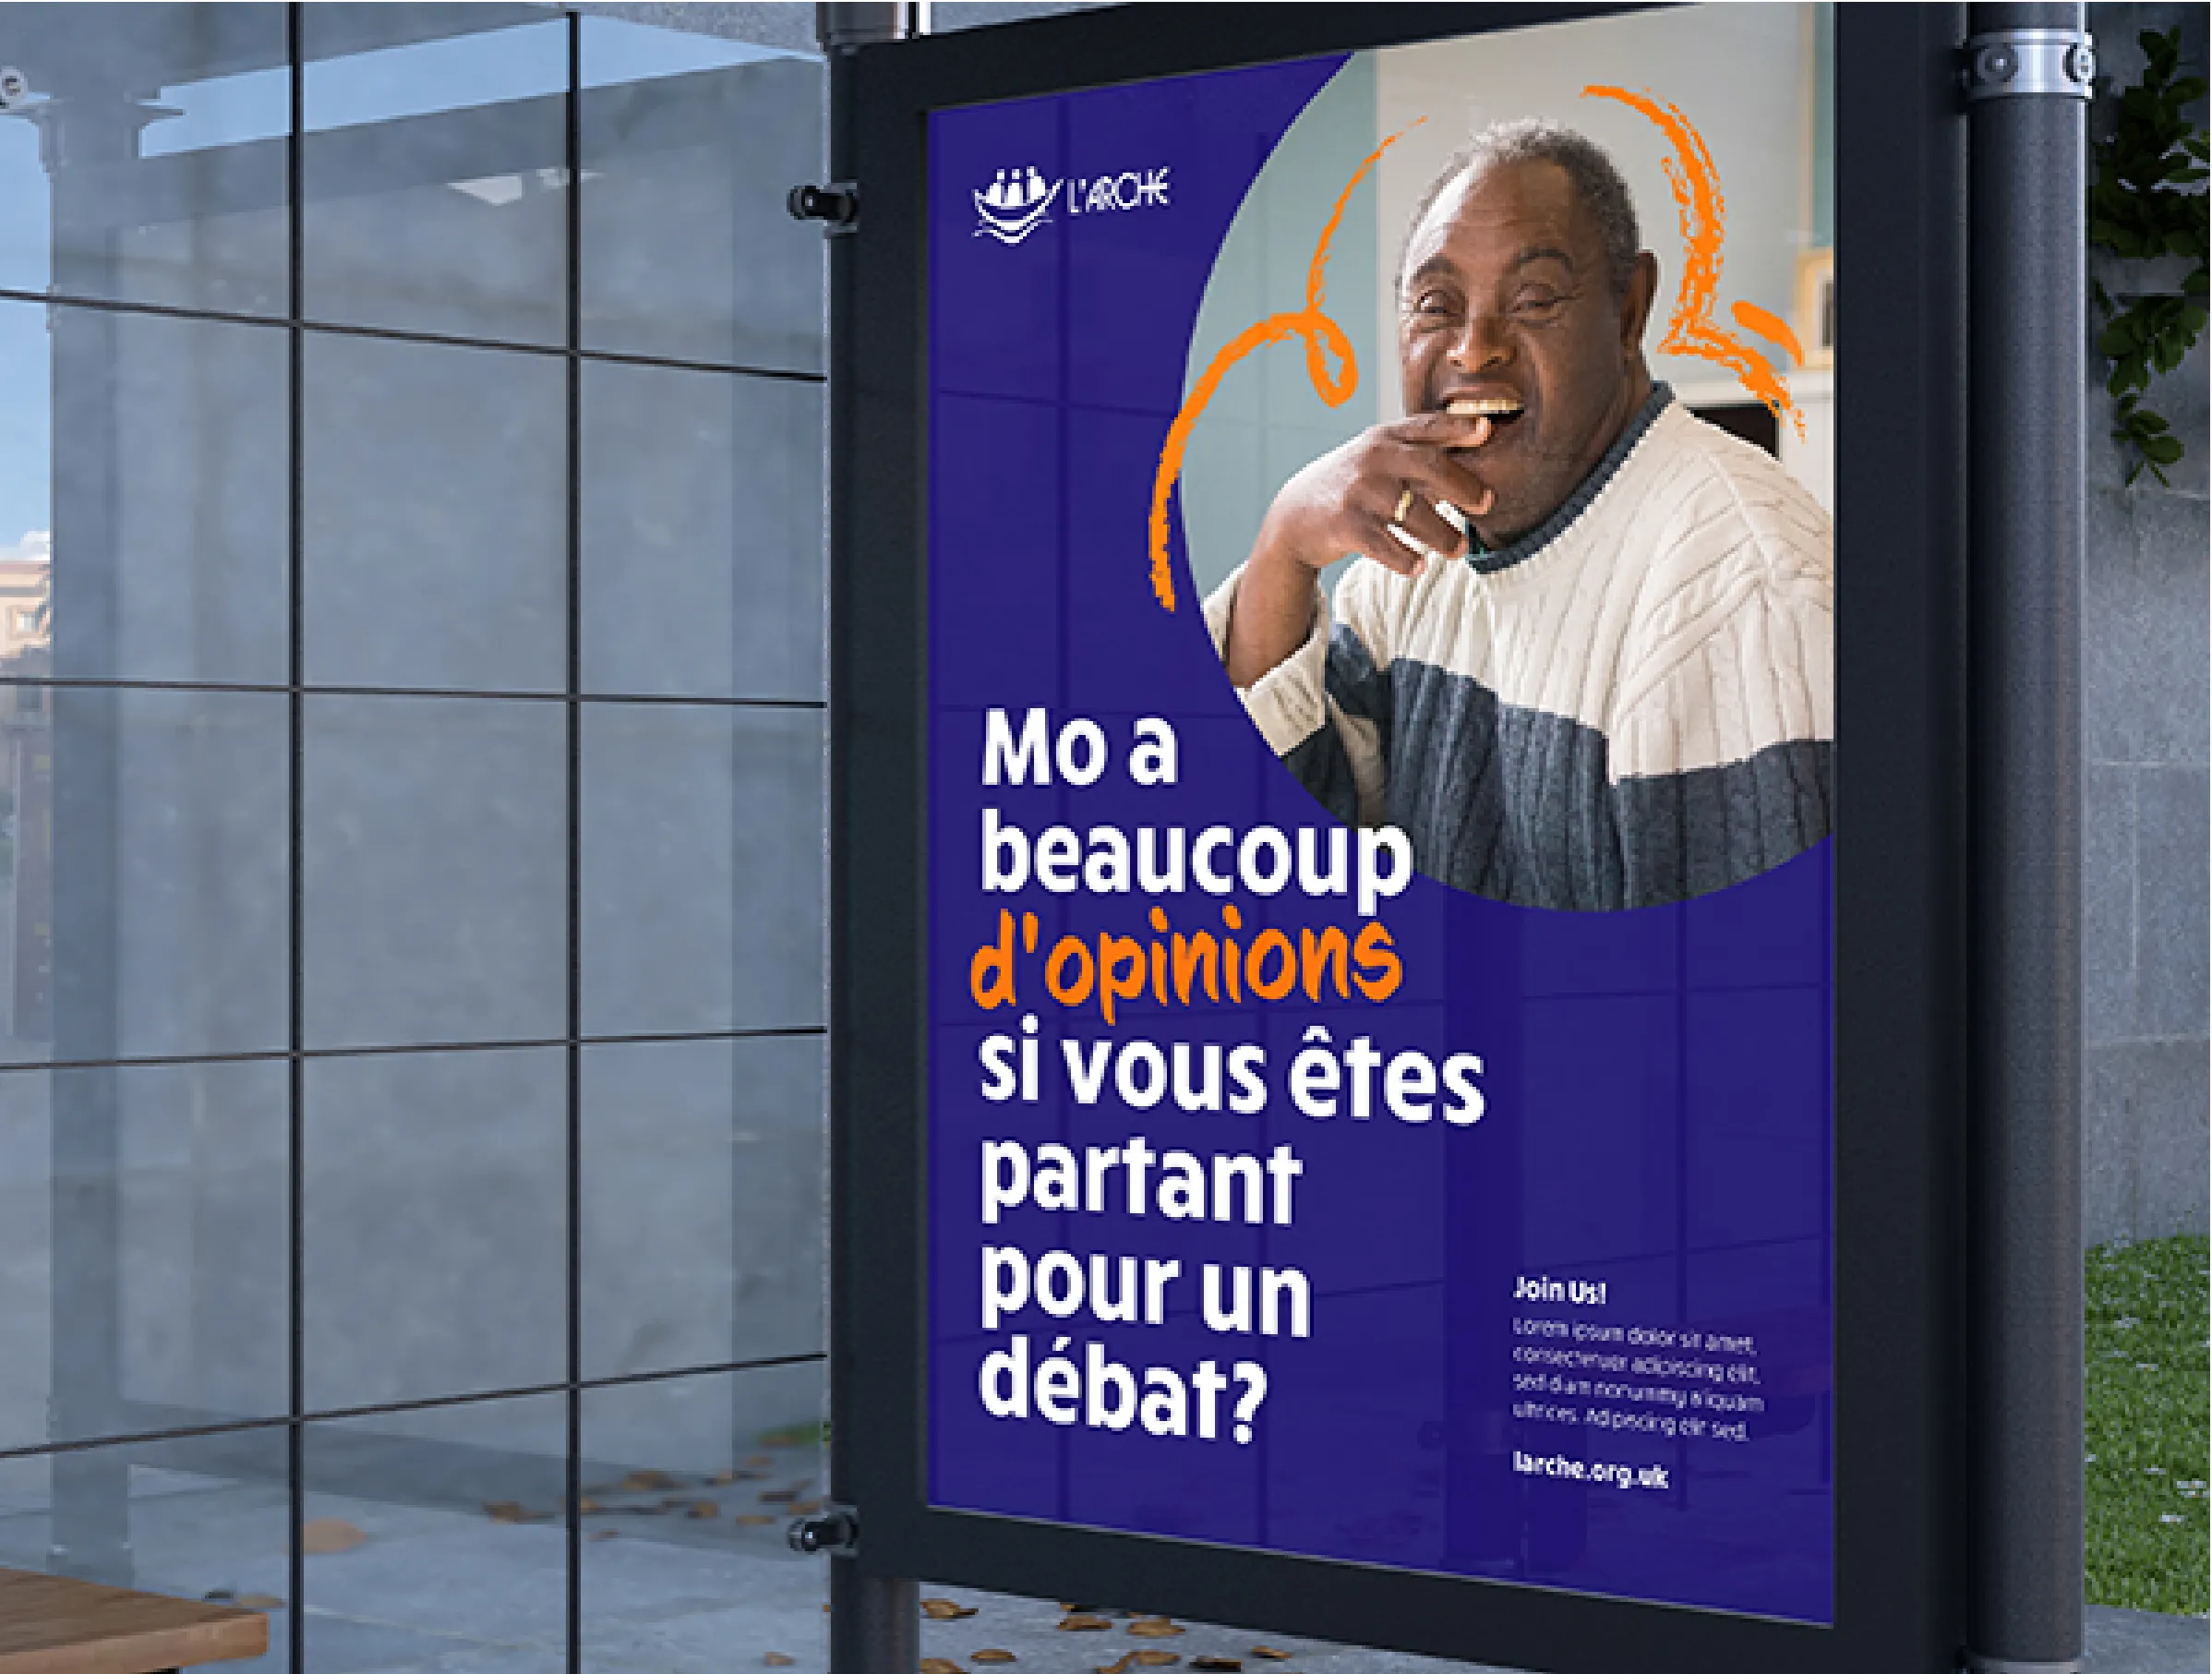 L'arche french advertisement